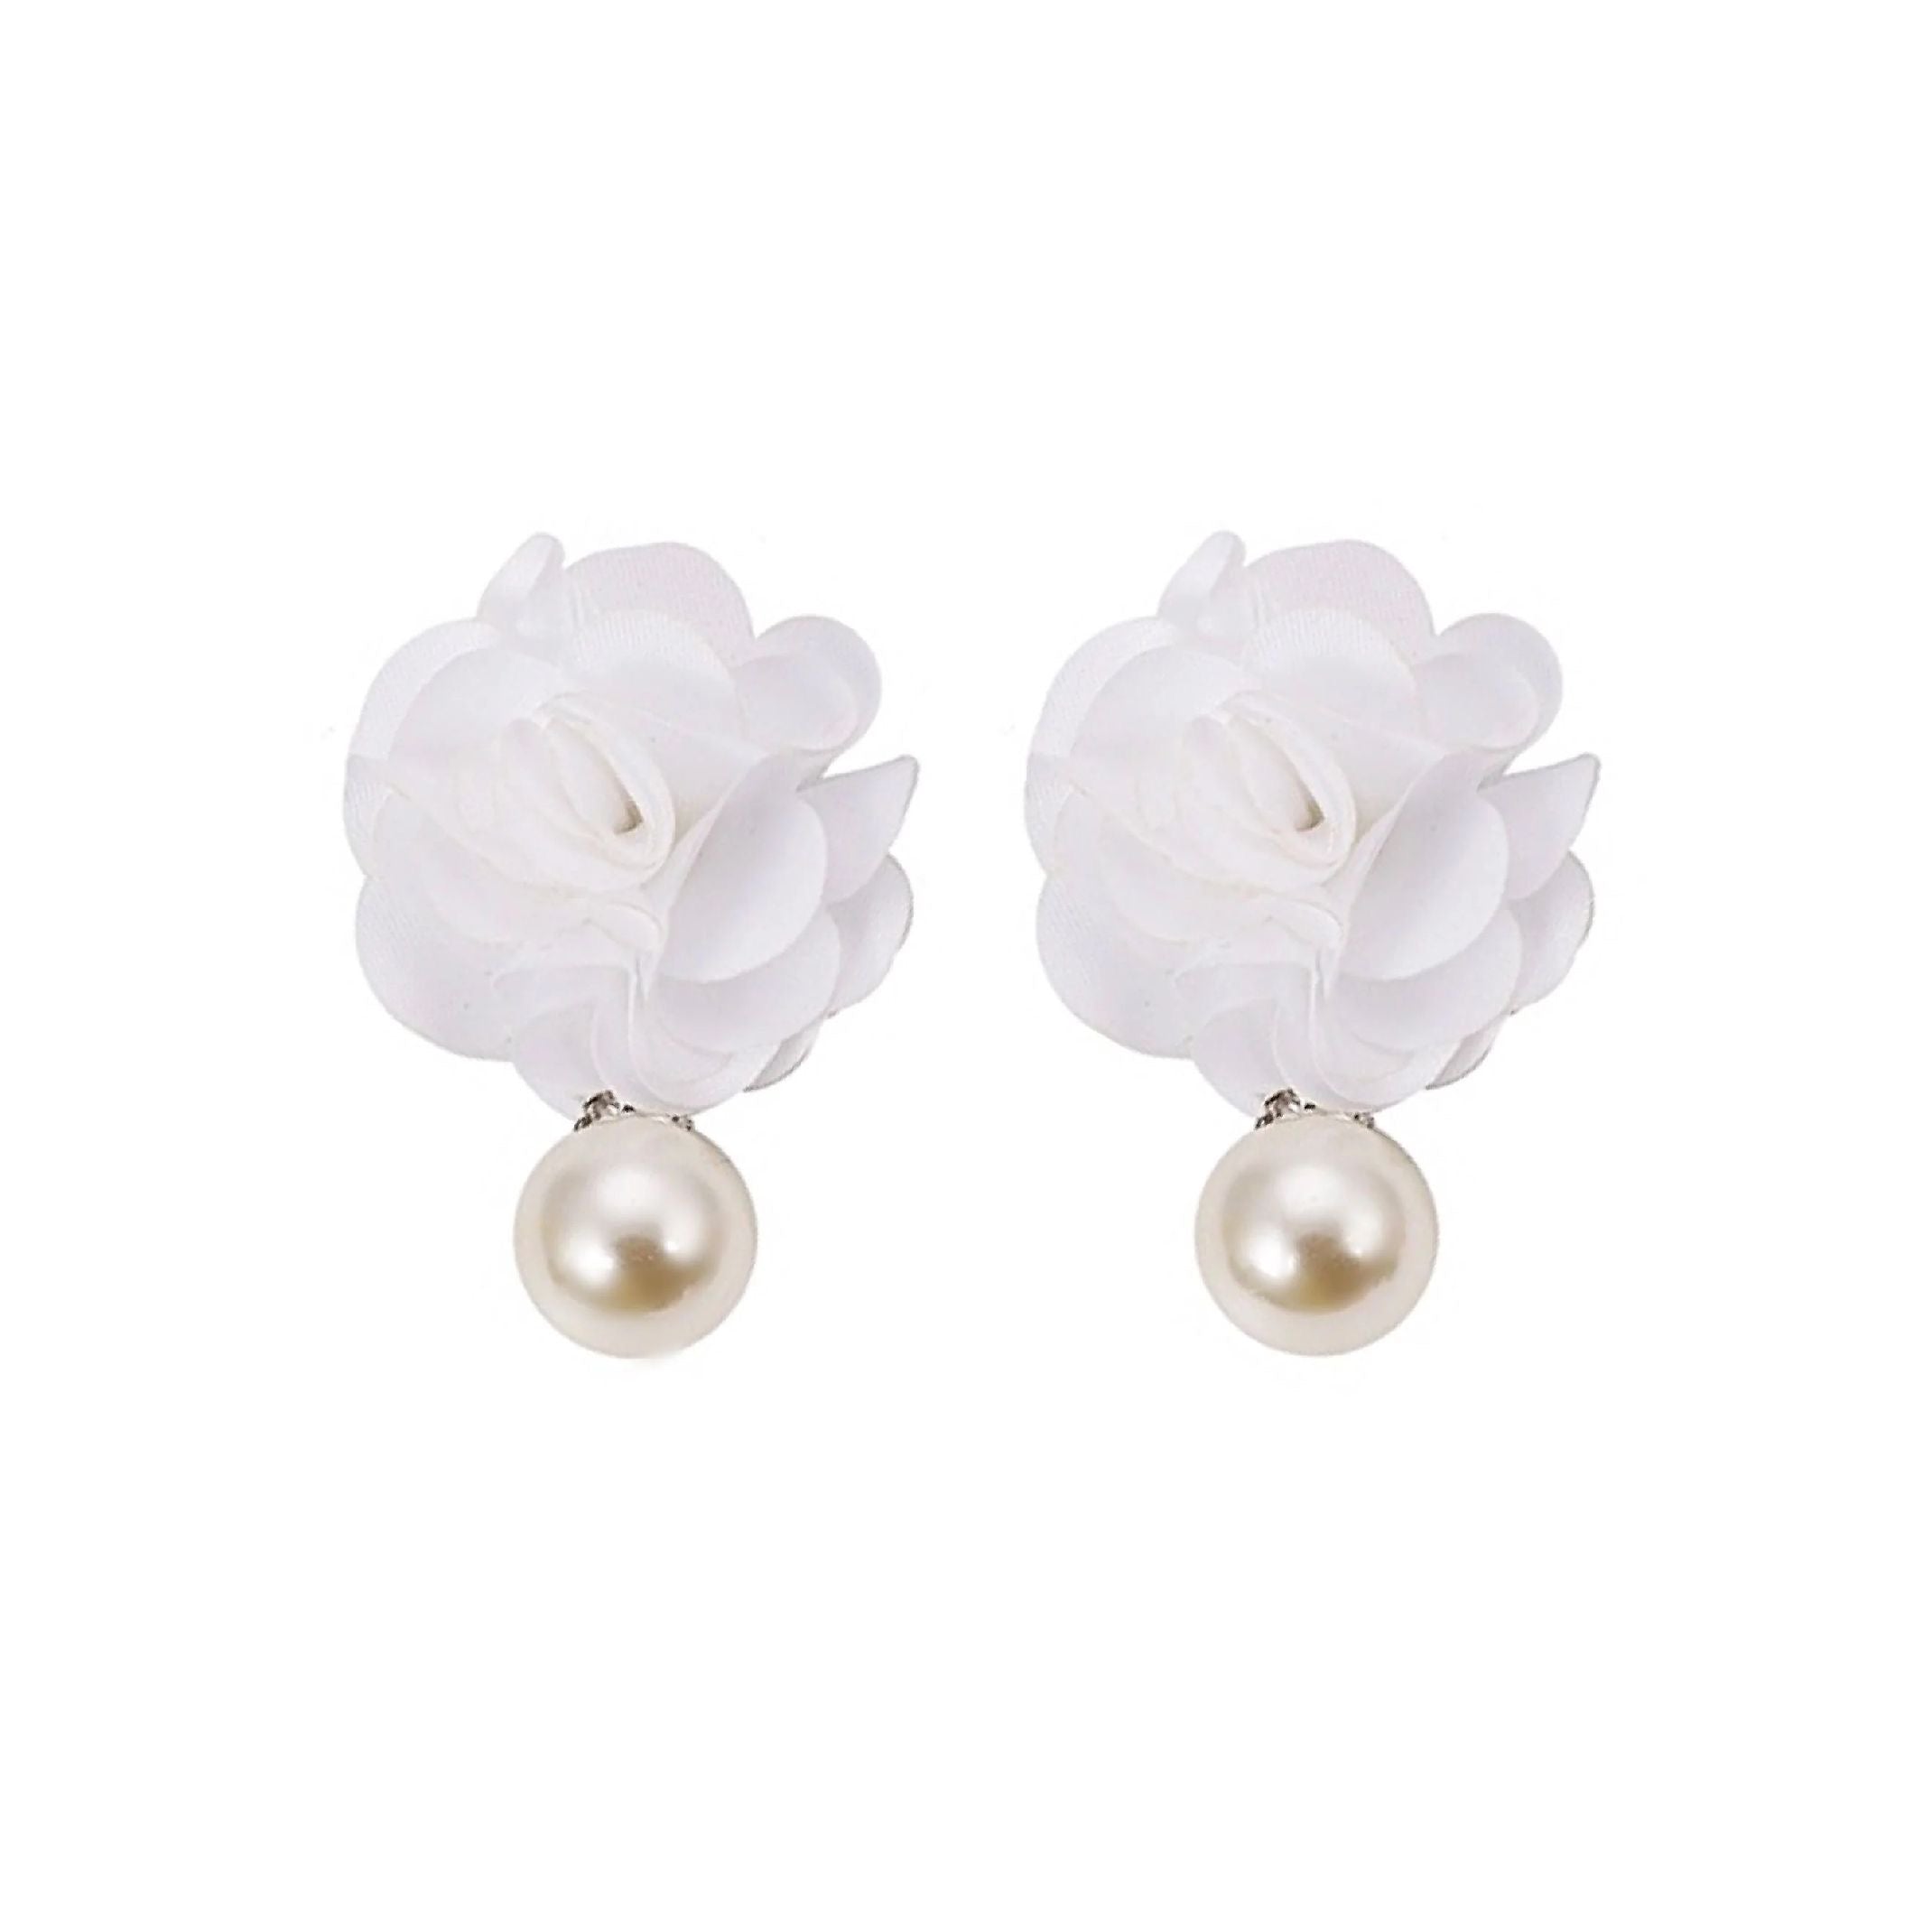 White flower pearl earrings 